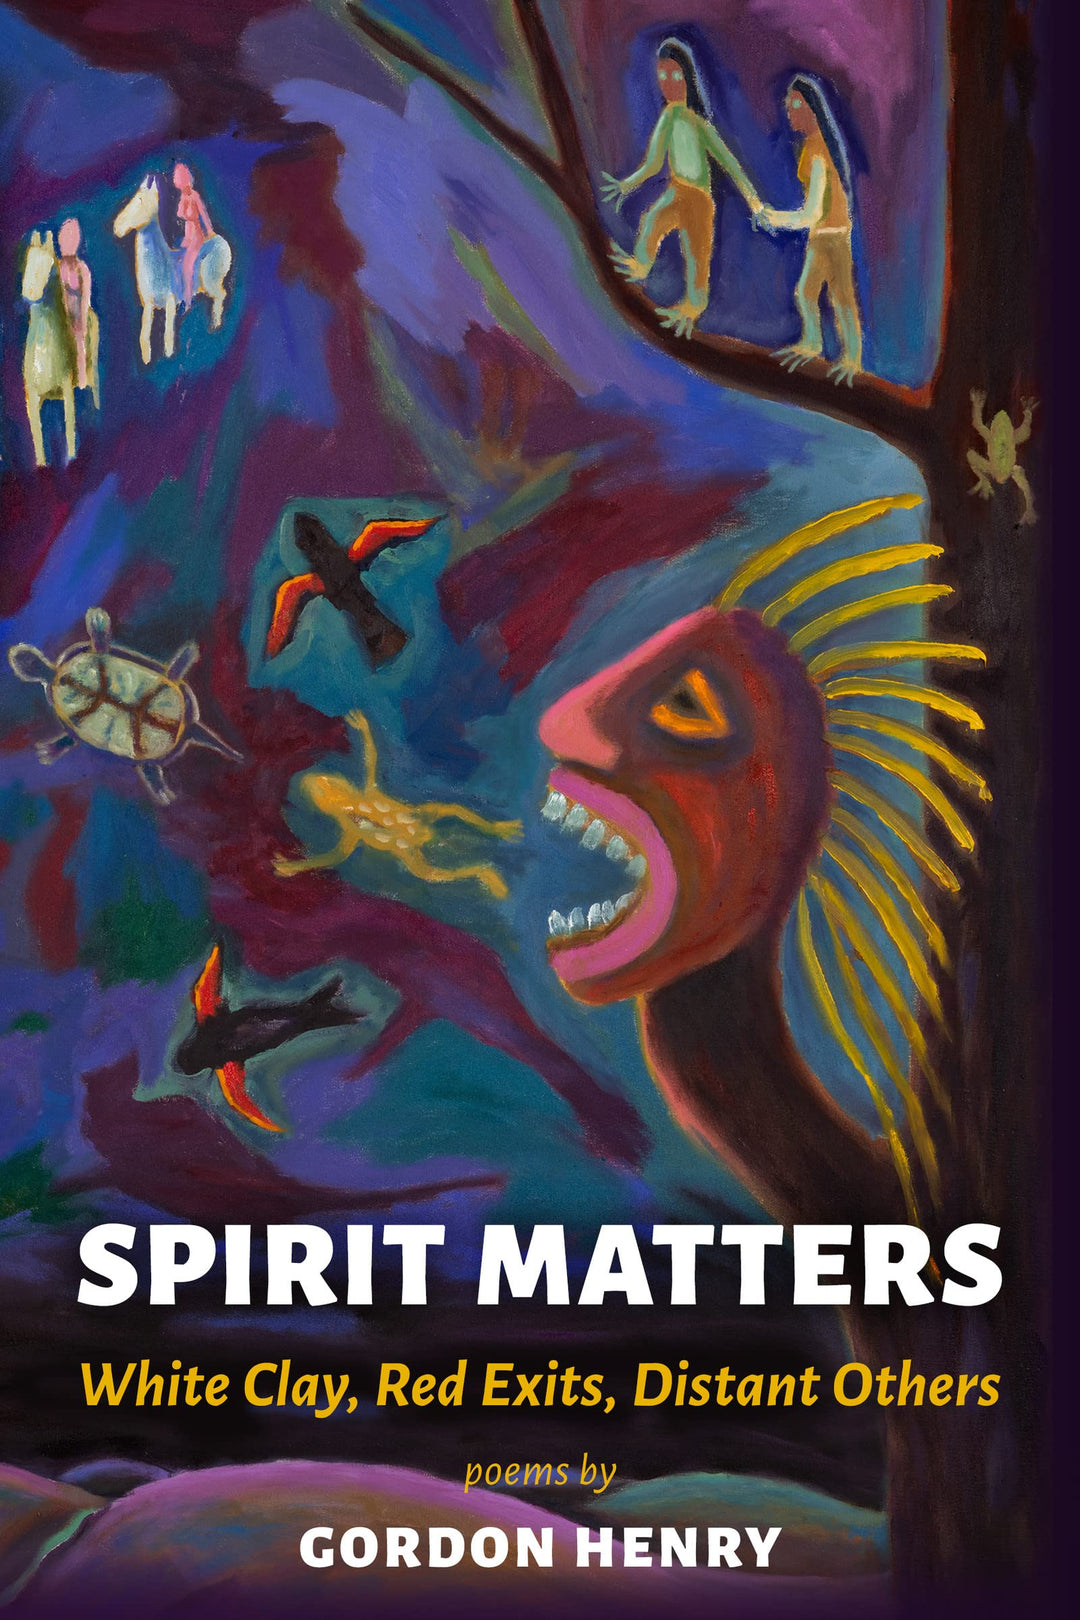  Spirit Matters by Gordon henry Jr.